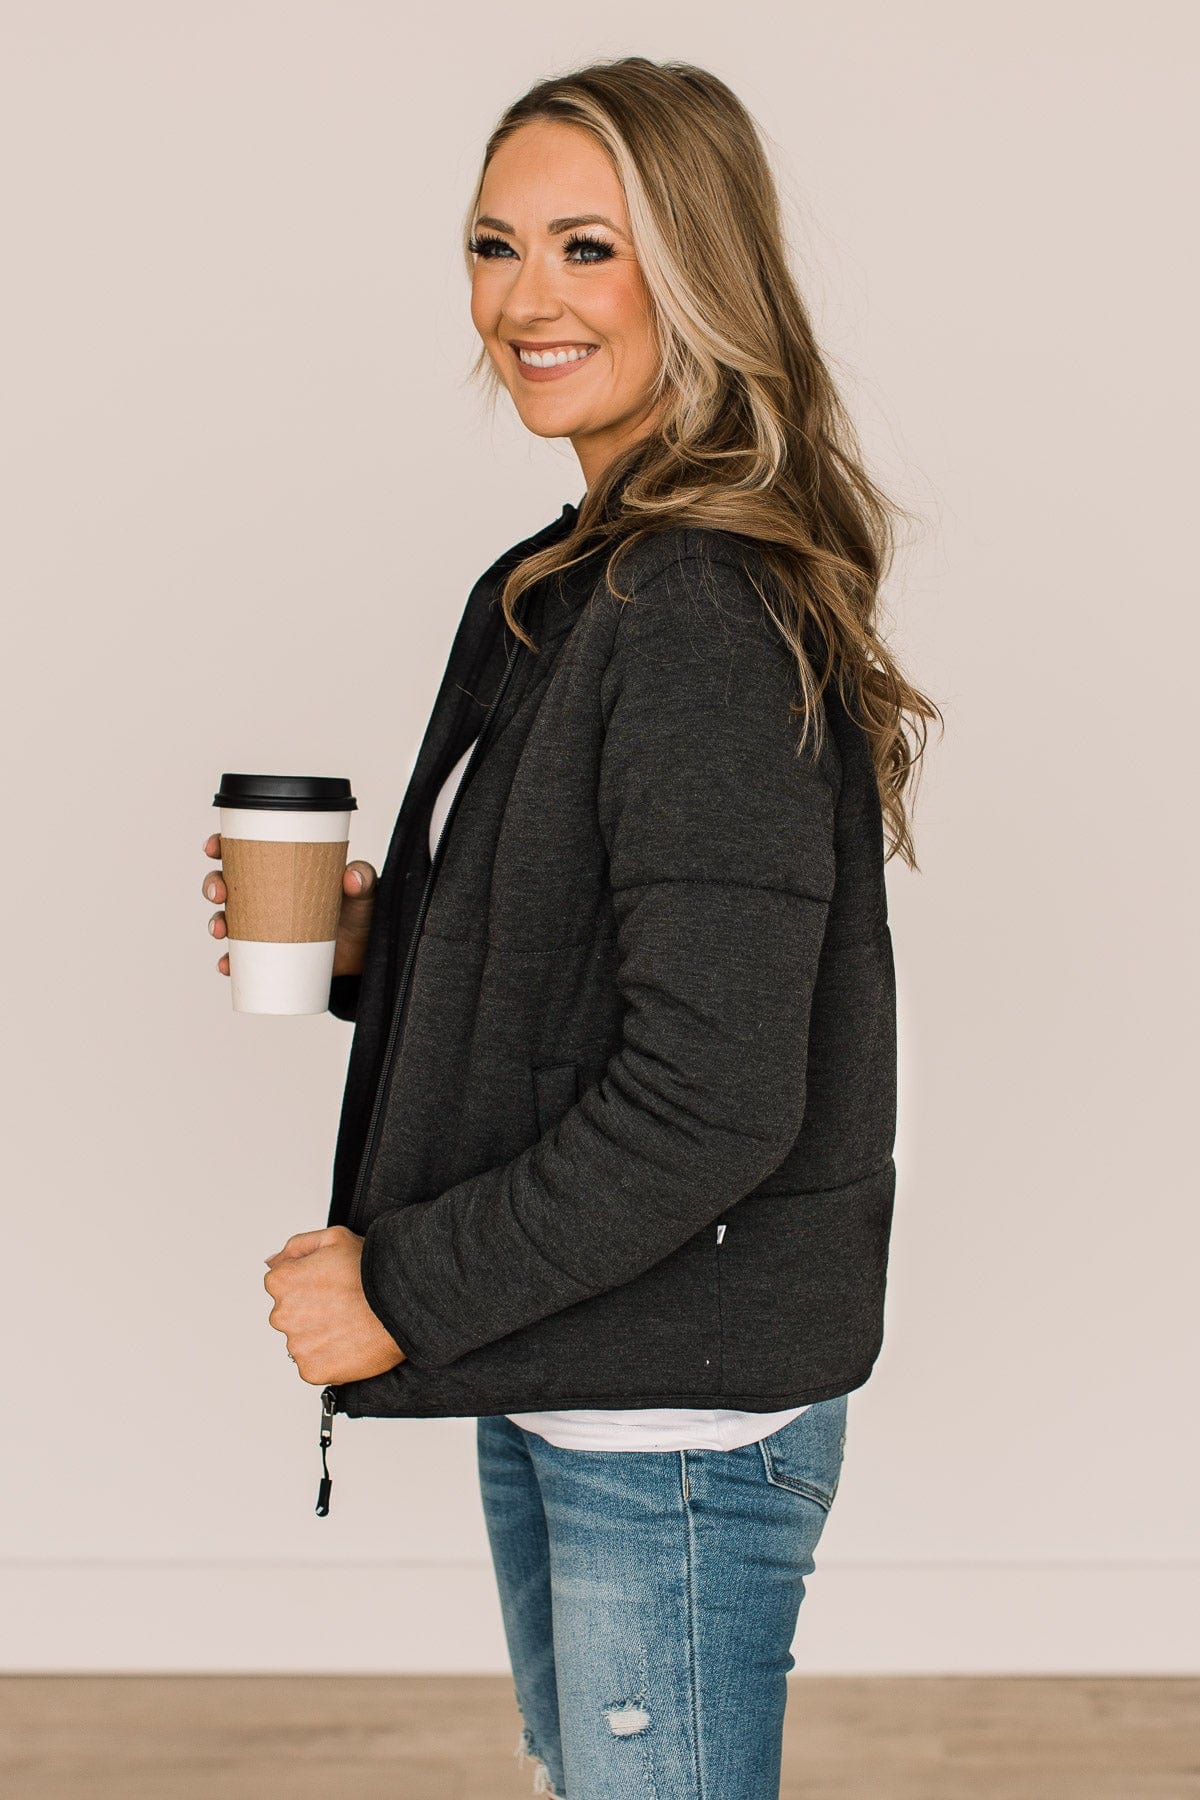 Thread & Supply Perfectly Cozy Puffer Jacket- Heather Black